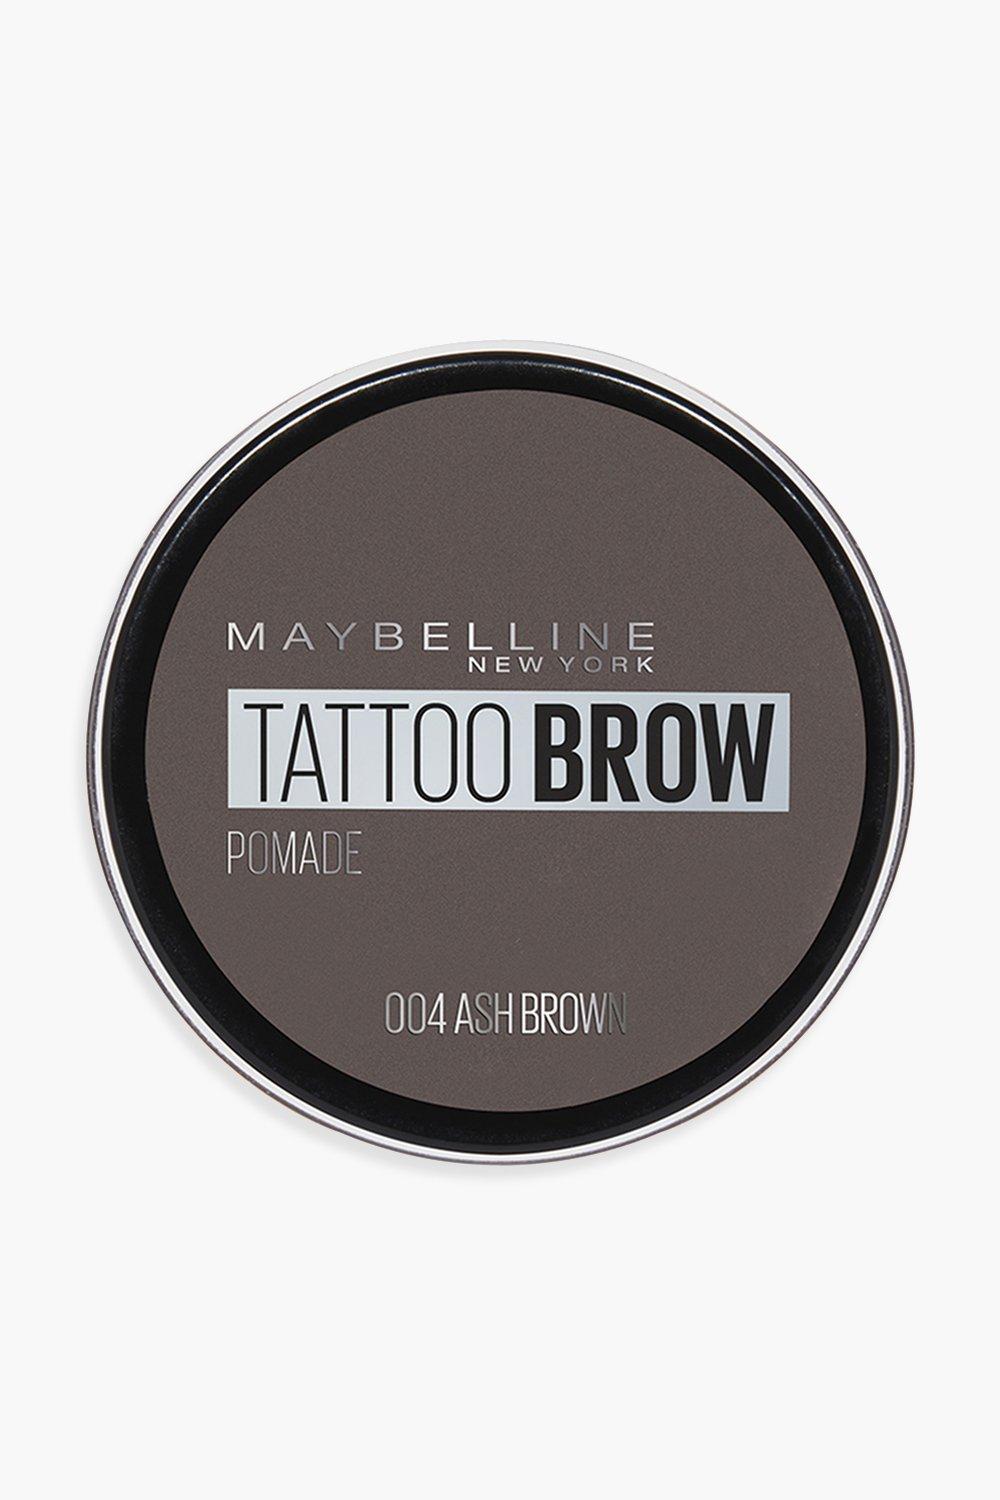 Maybelline Tattoo Brow Eyebrow Pomade, 04 Ash Brown